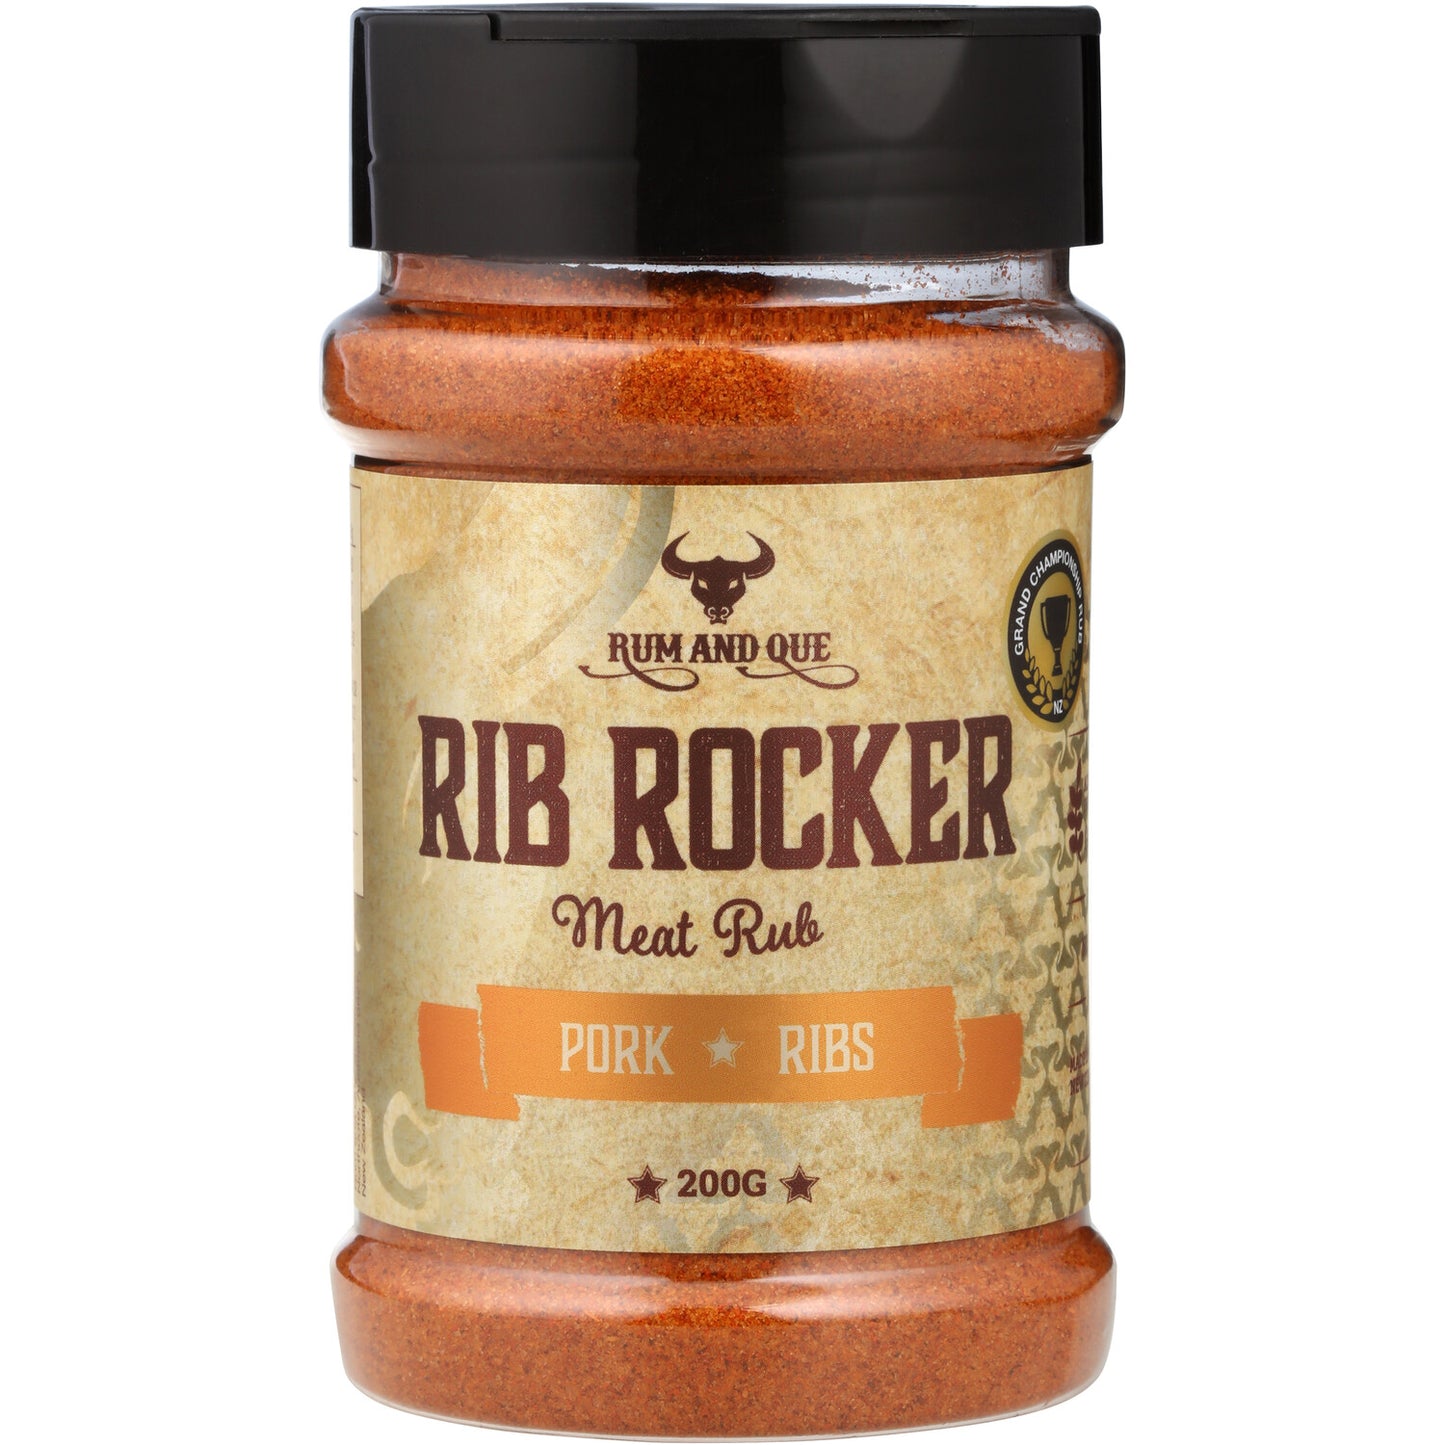 Rum and Que Rib Rocker - Shaker 200g